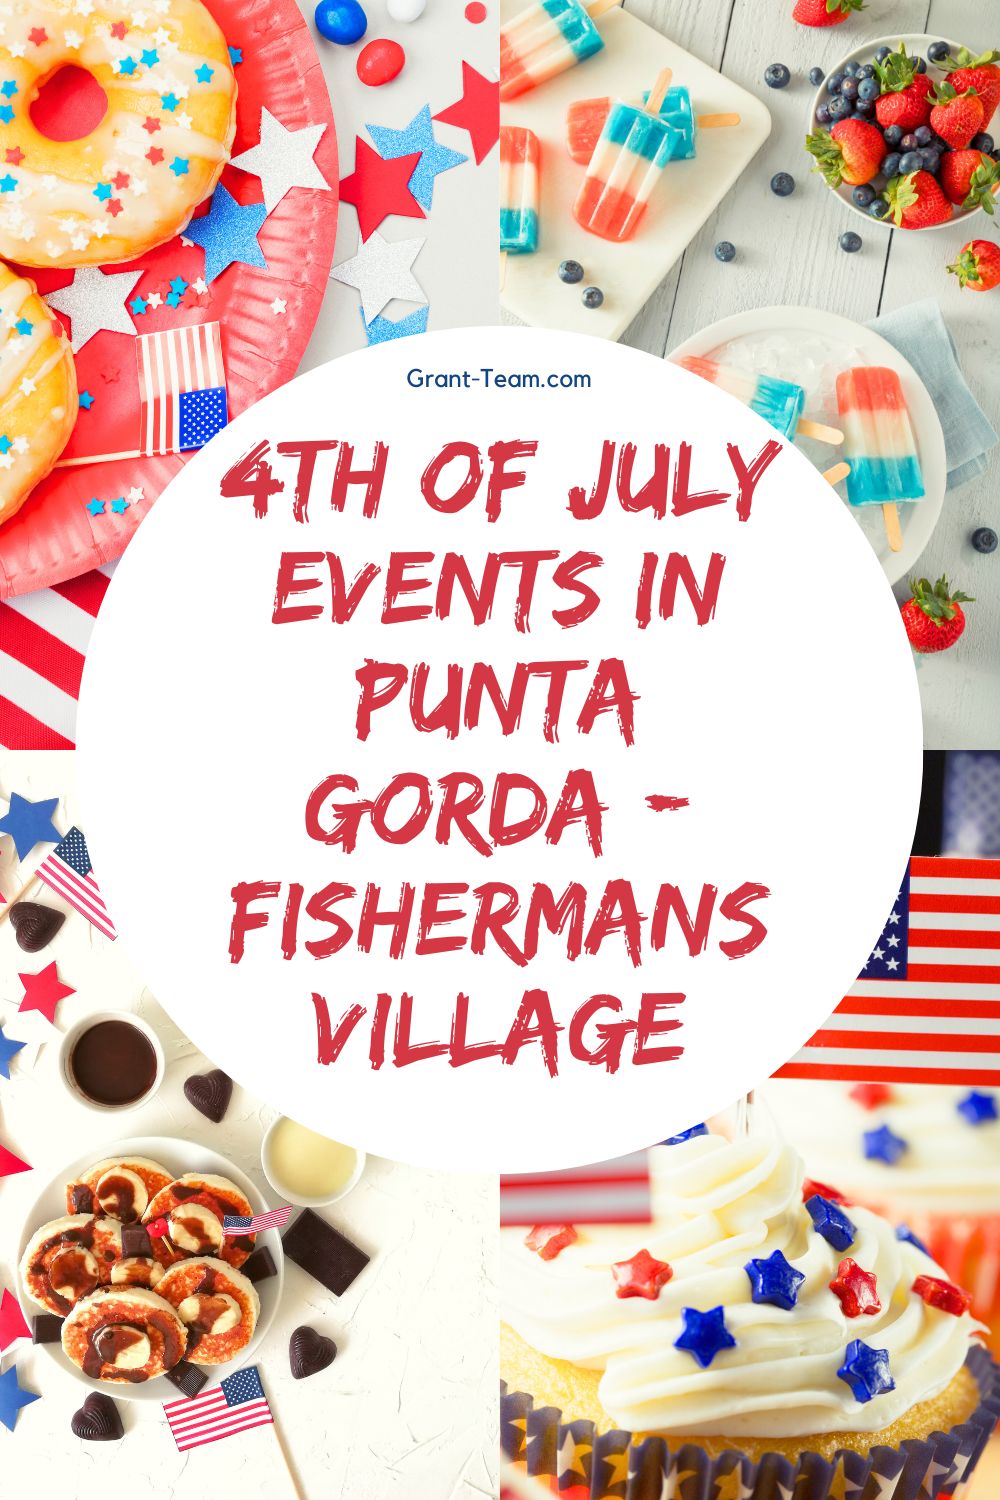 4th Of July Events In Punta Gorda - Fishermans Village